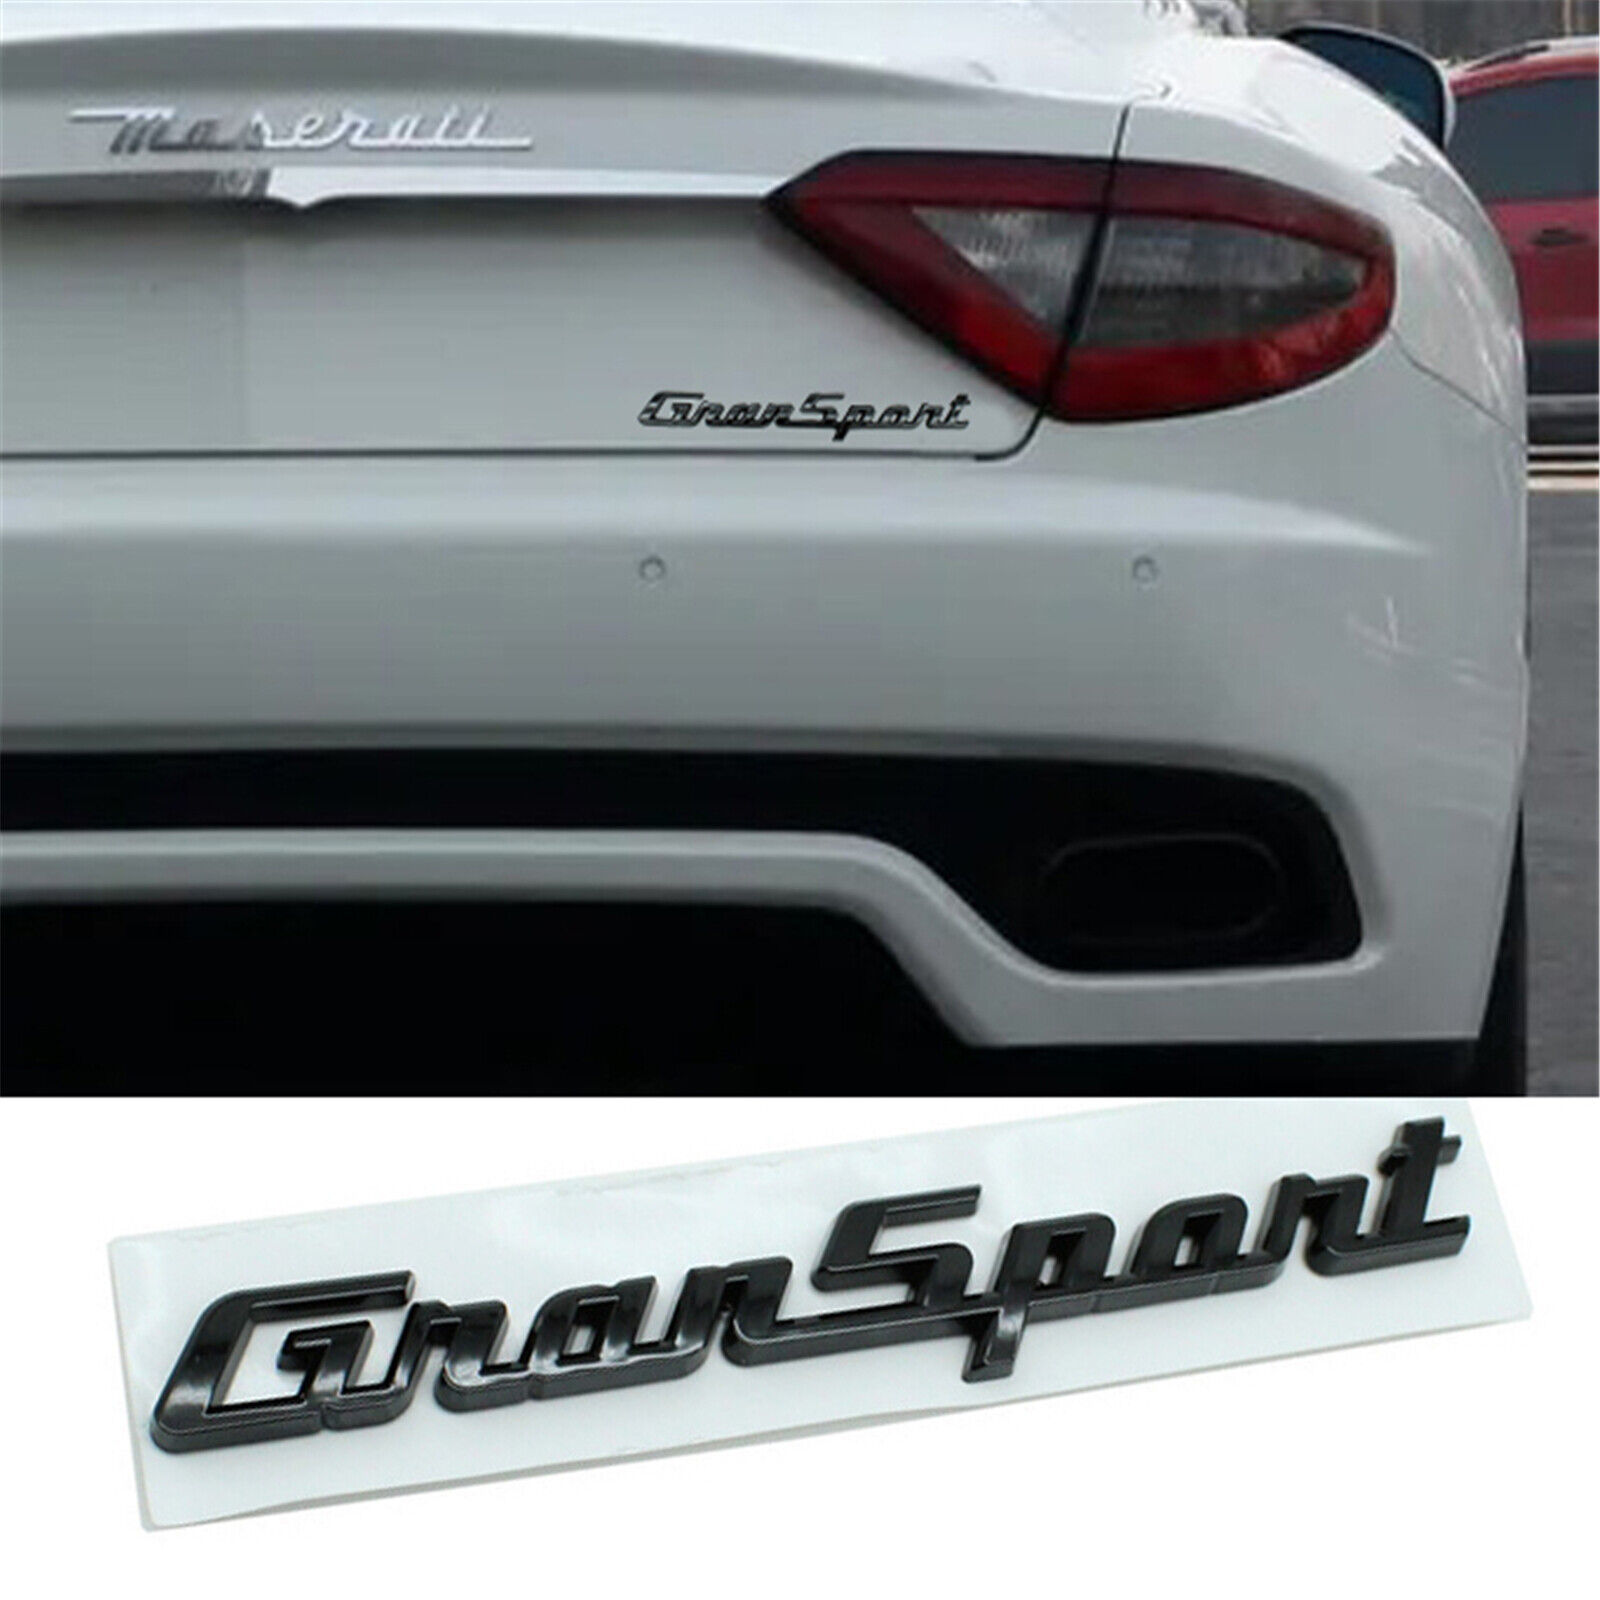 For Maserati Gransport Glossy black Rear Badge Emblem Look Deck lid Trunk decal